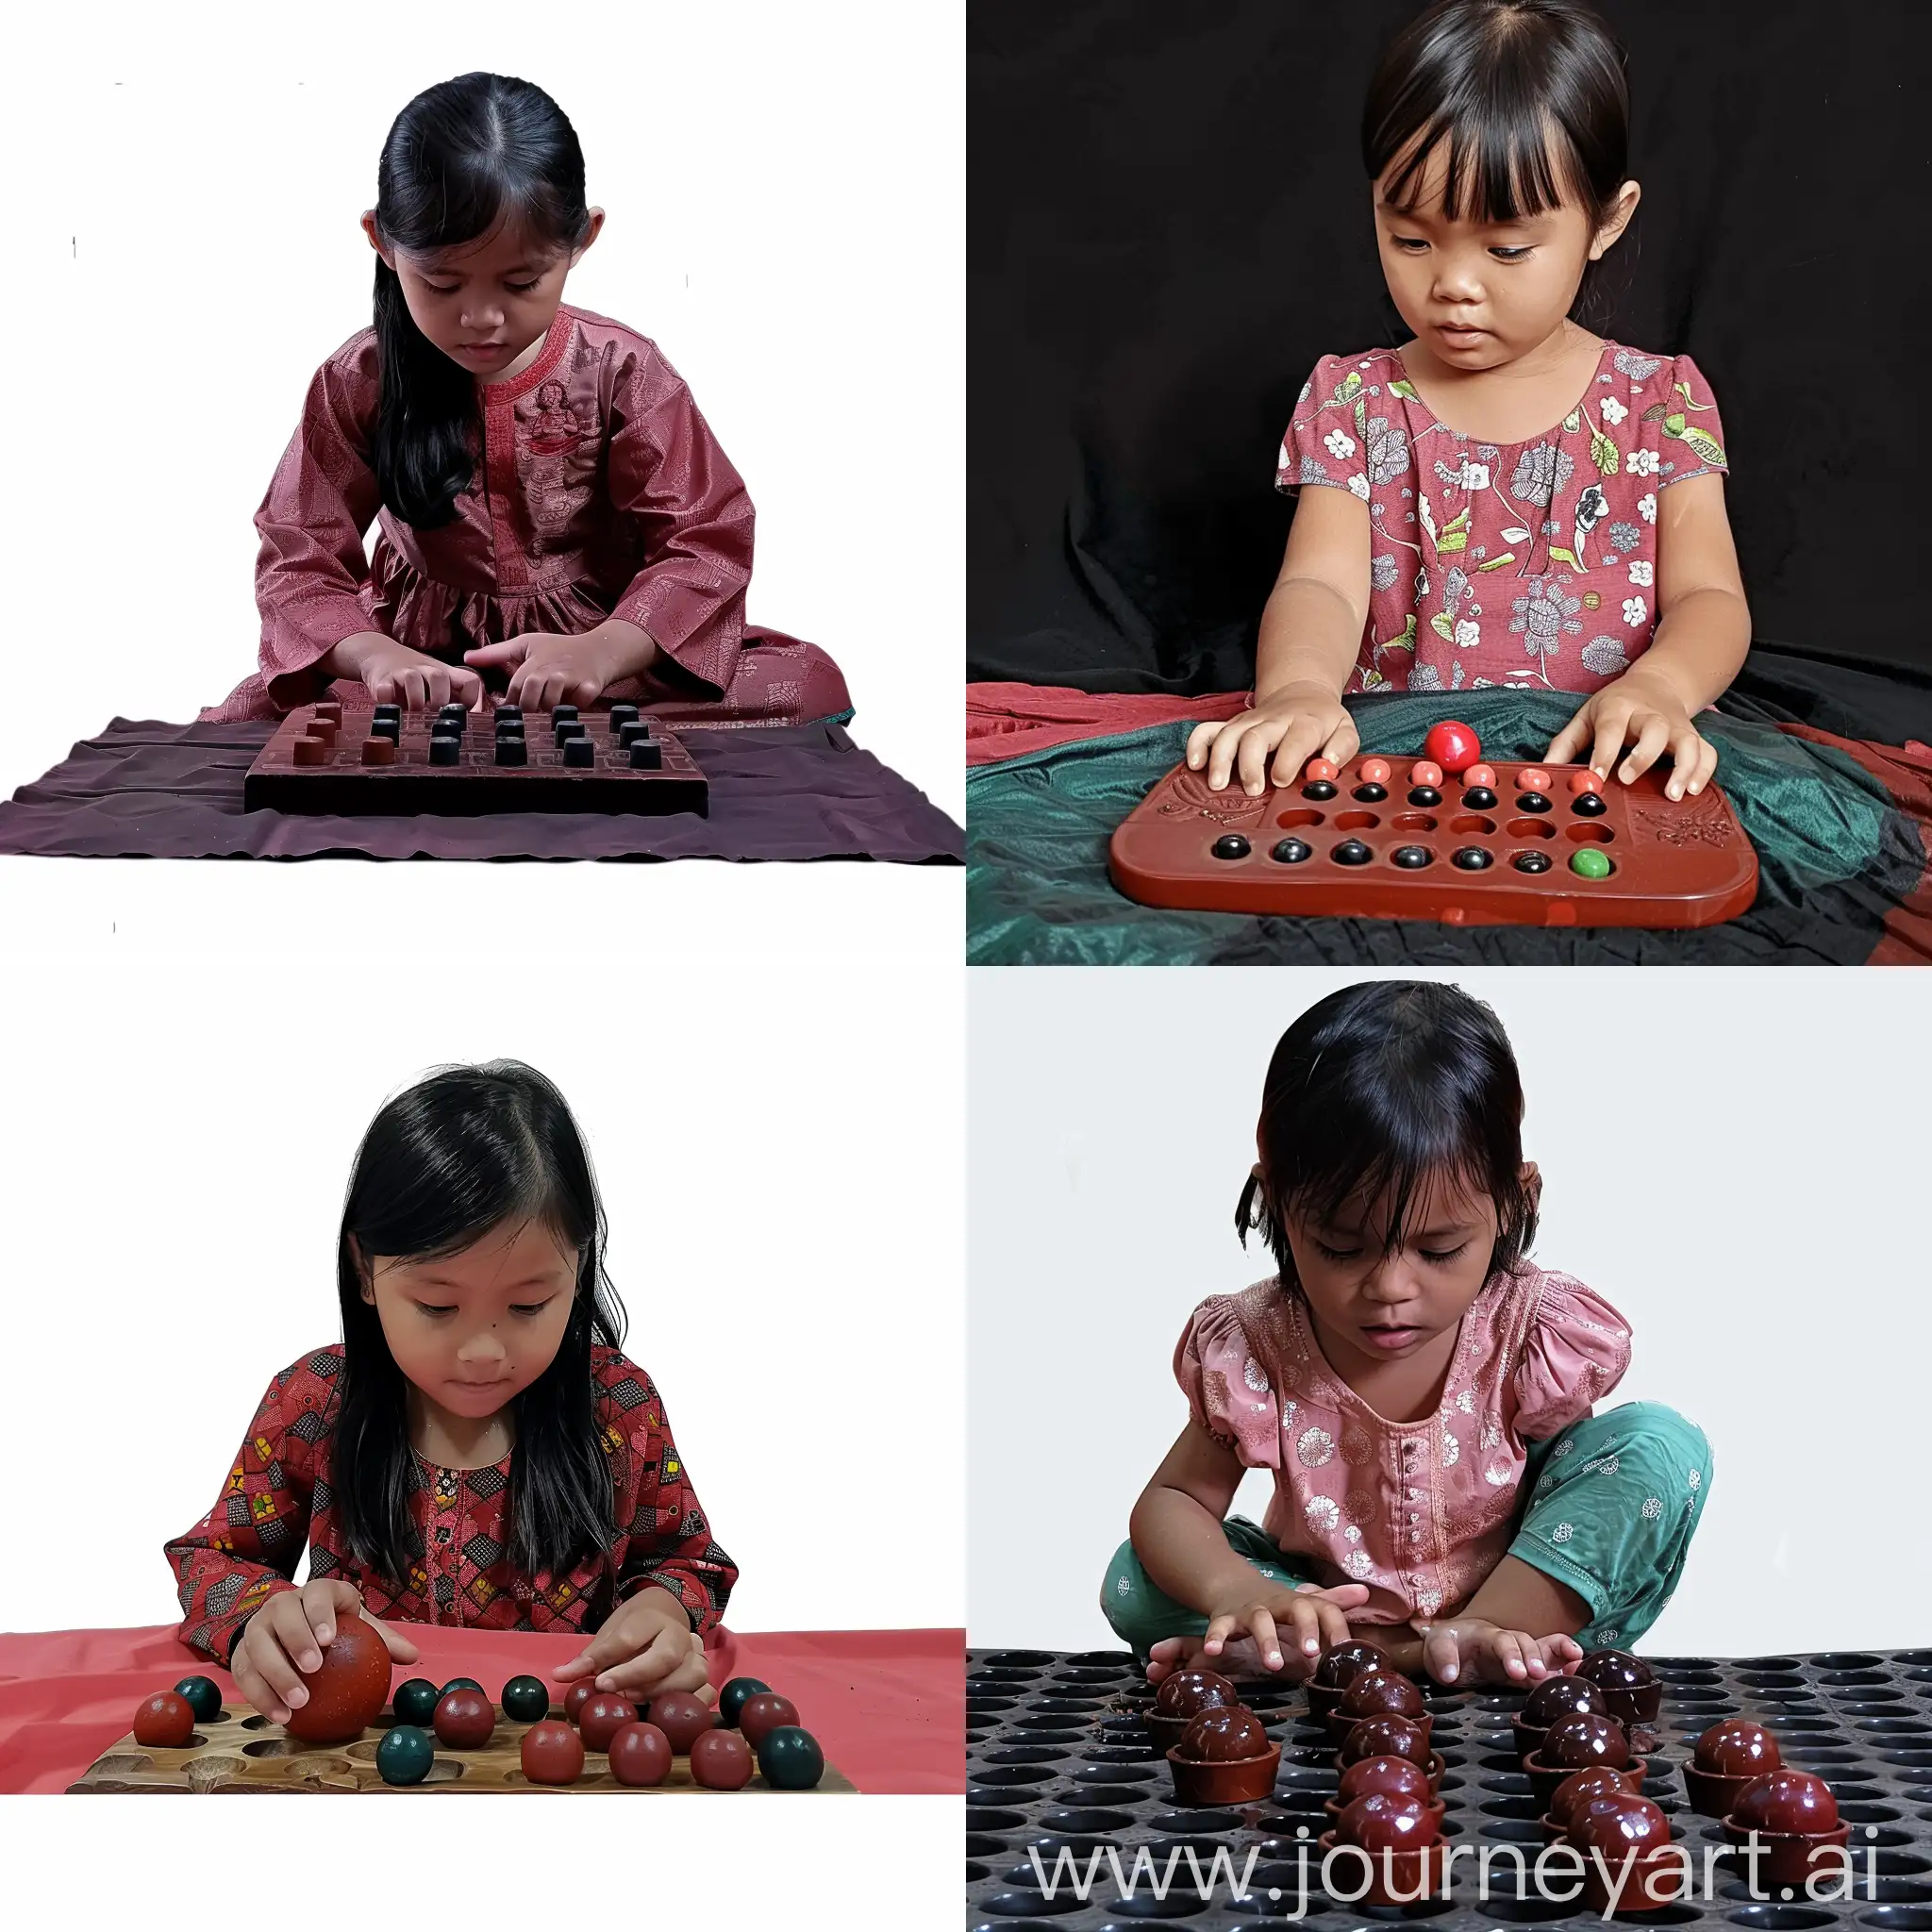 Adorable-Malay-Toddler-Enjoying-Traditional-Congkak-Board-Game